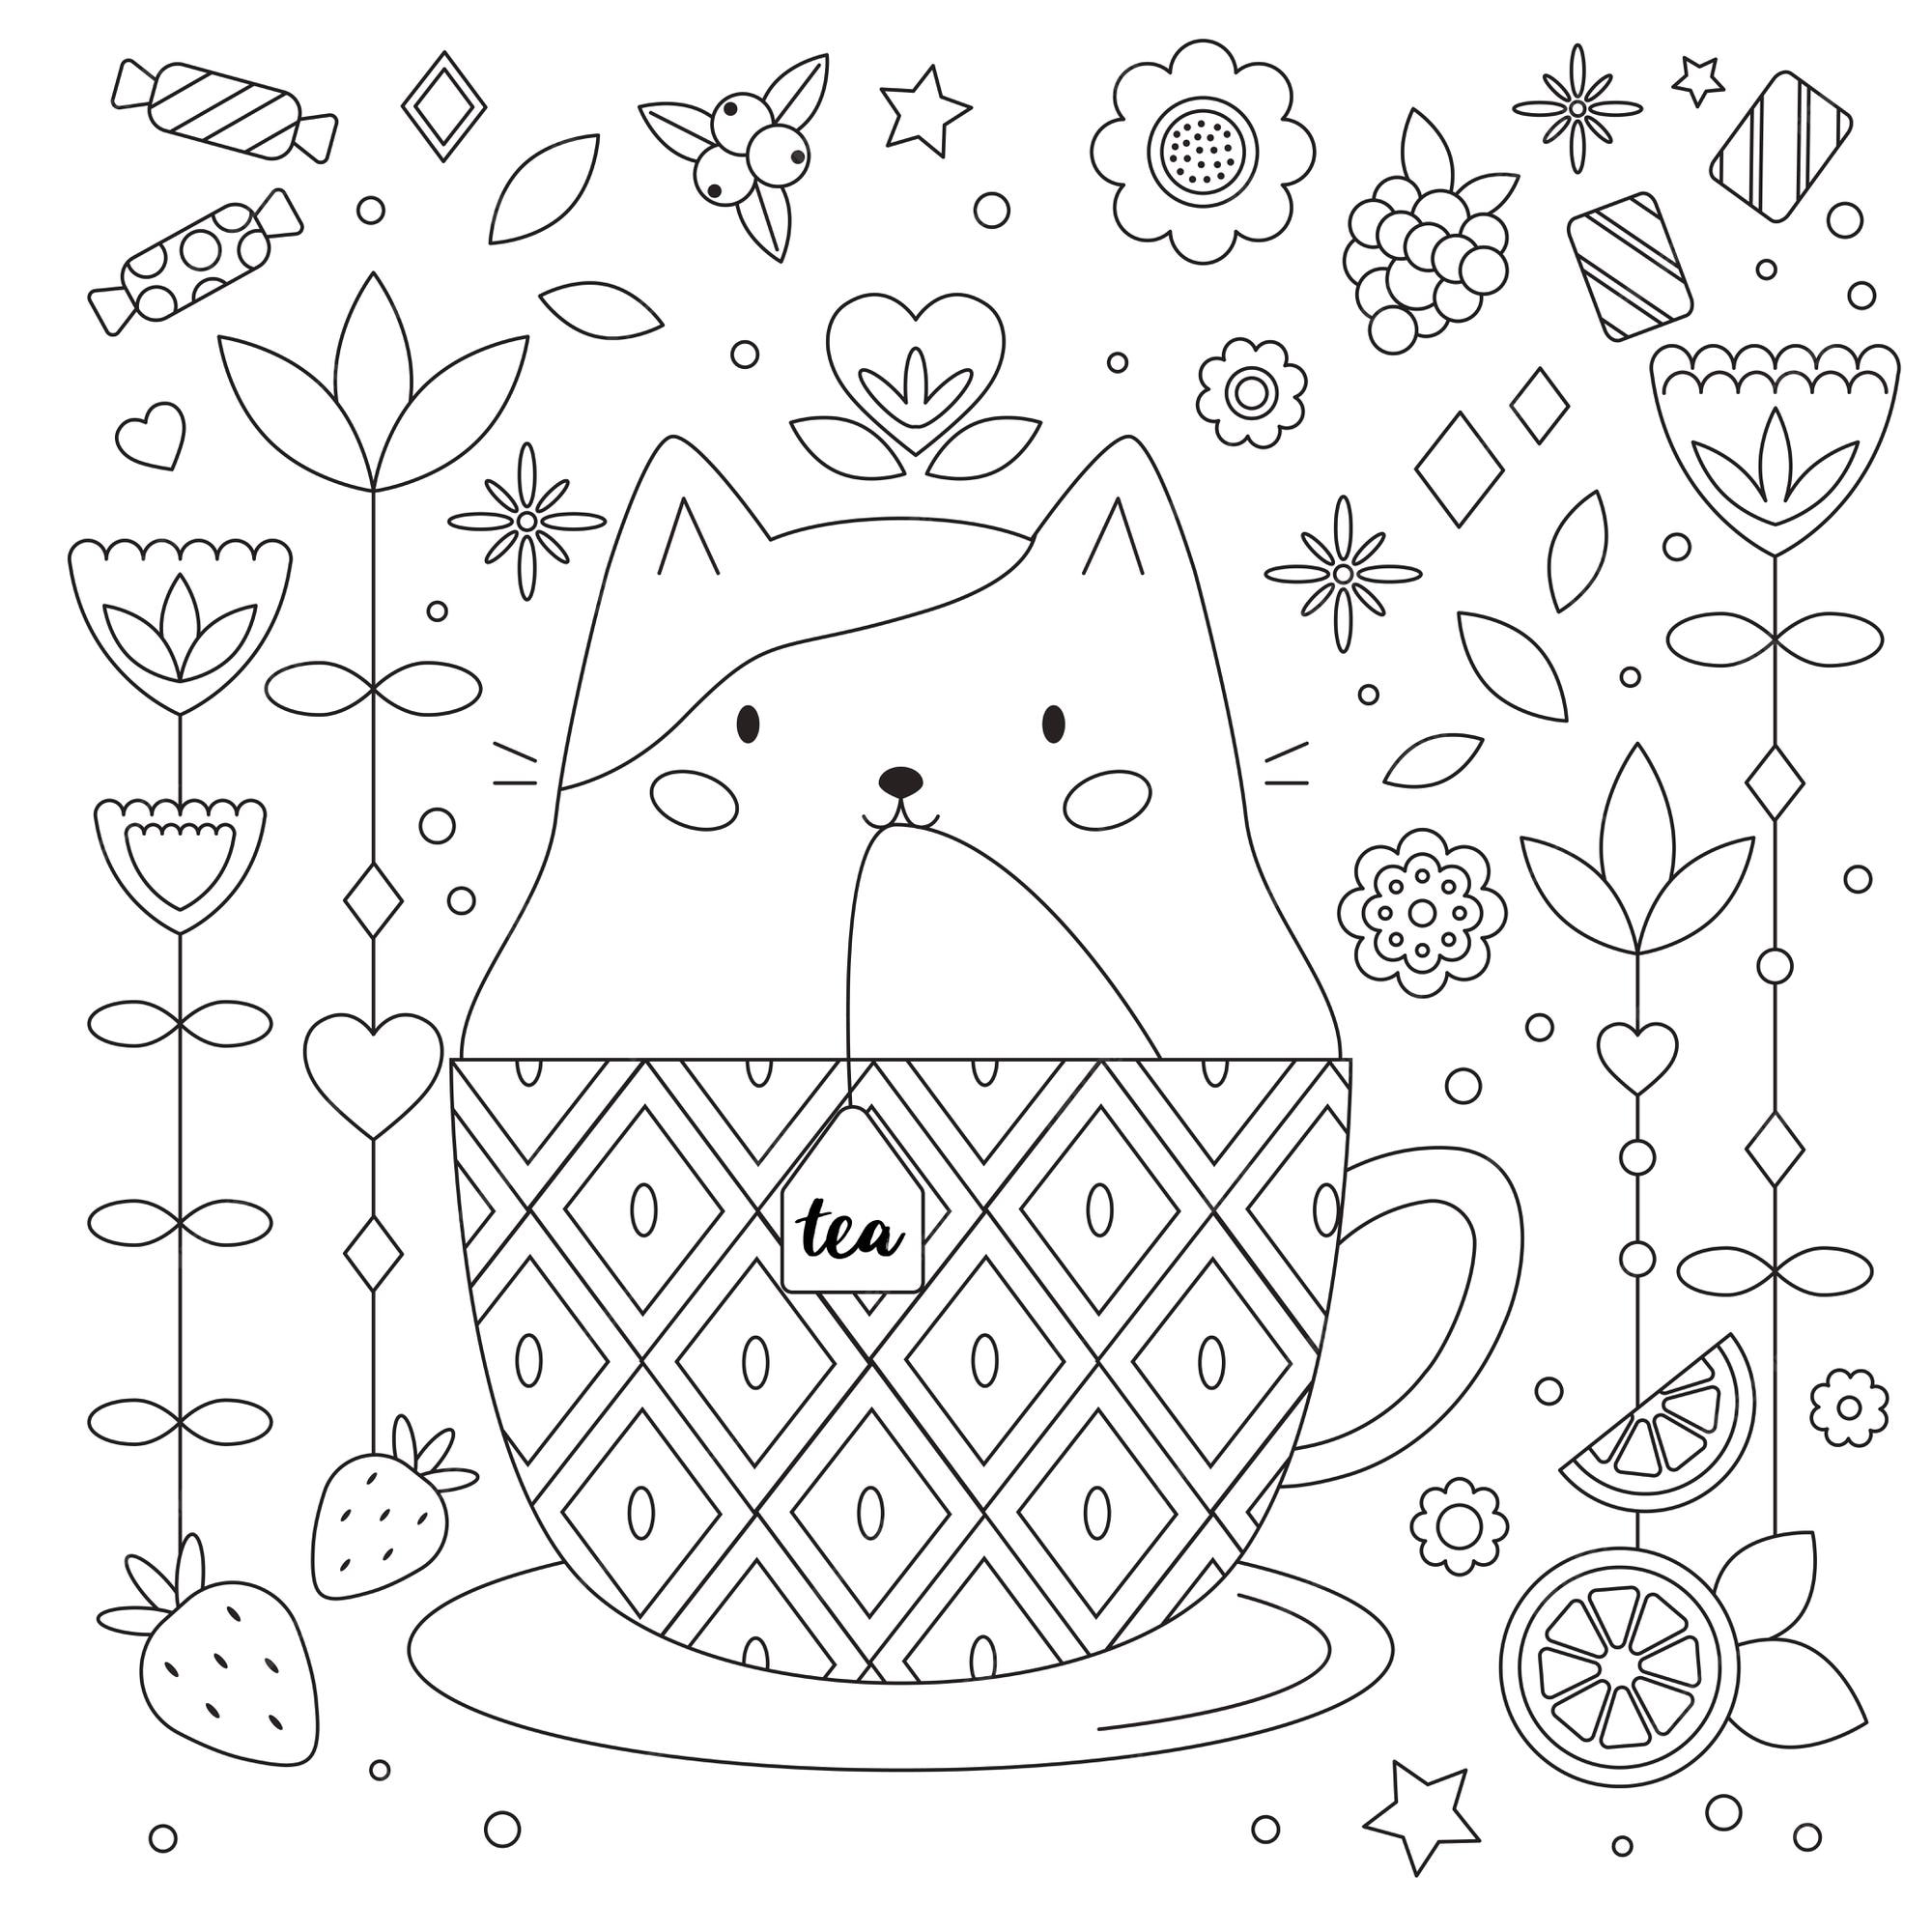 xícara e bule com padrões, página para colorir anti-estresse para